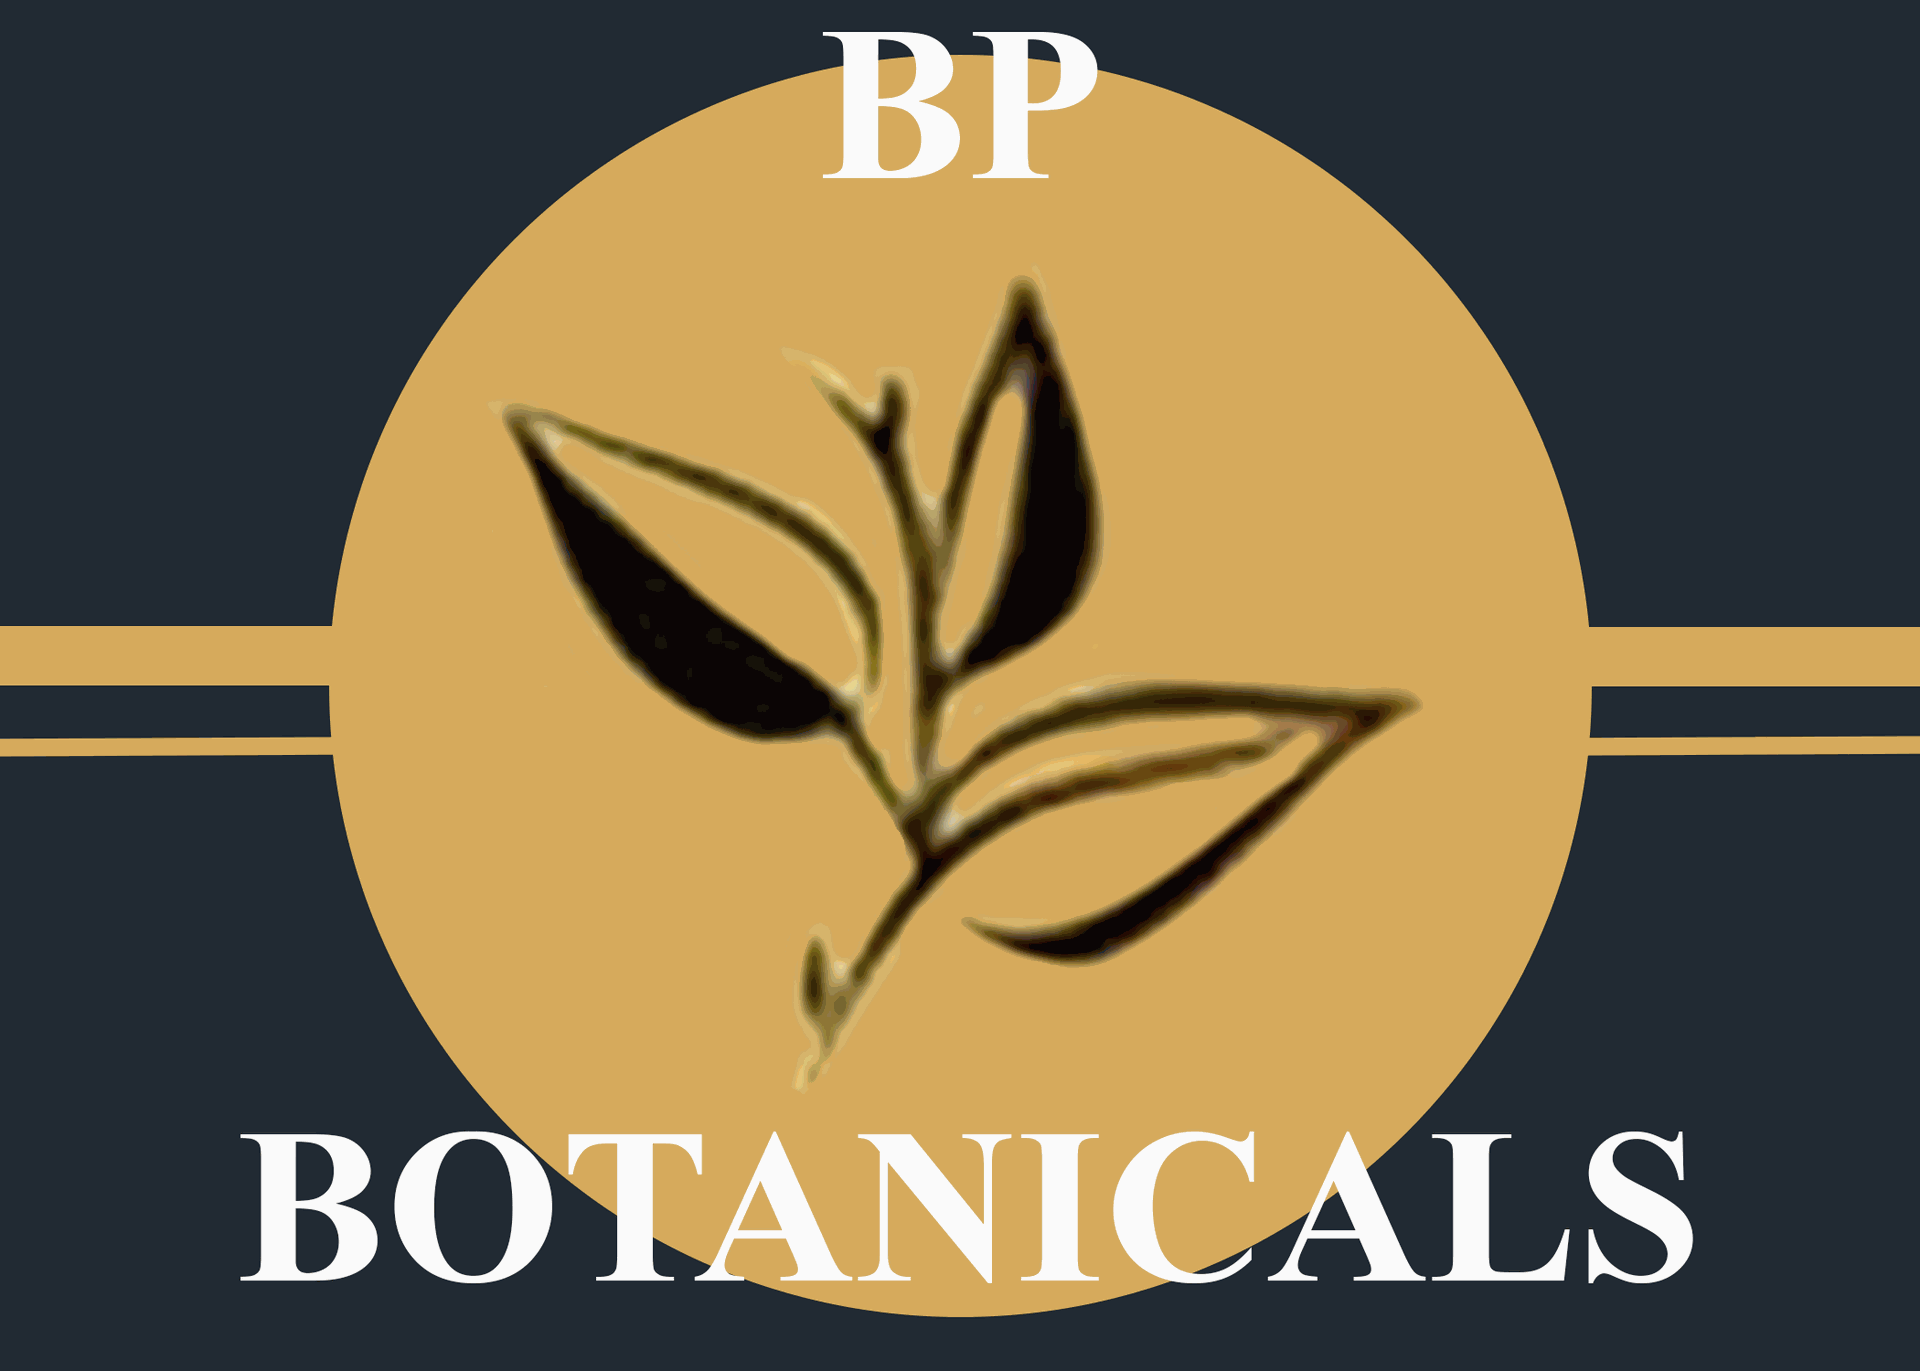 BP Botanicals